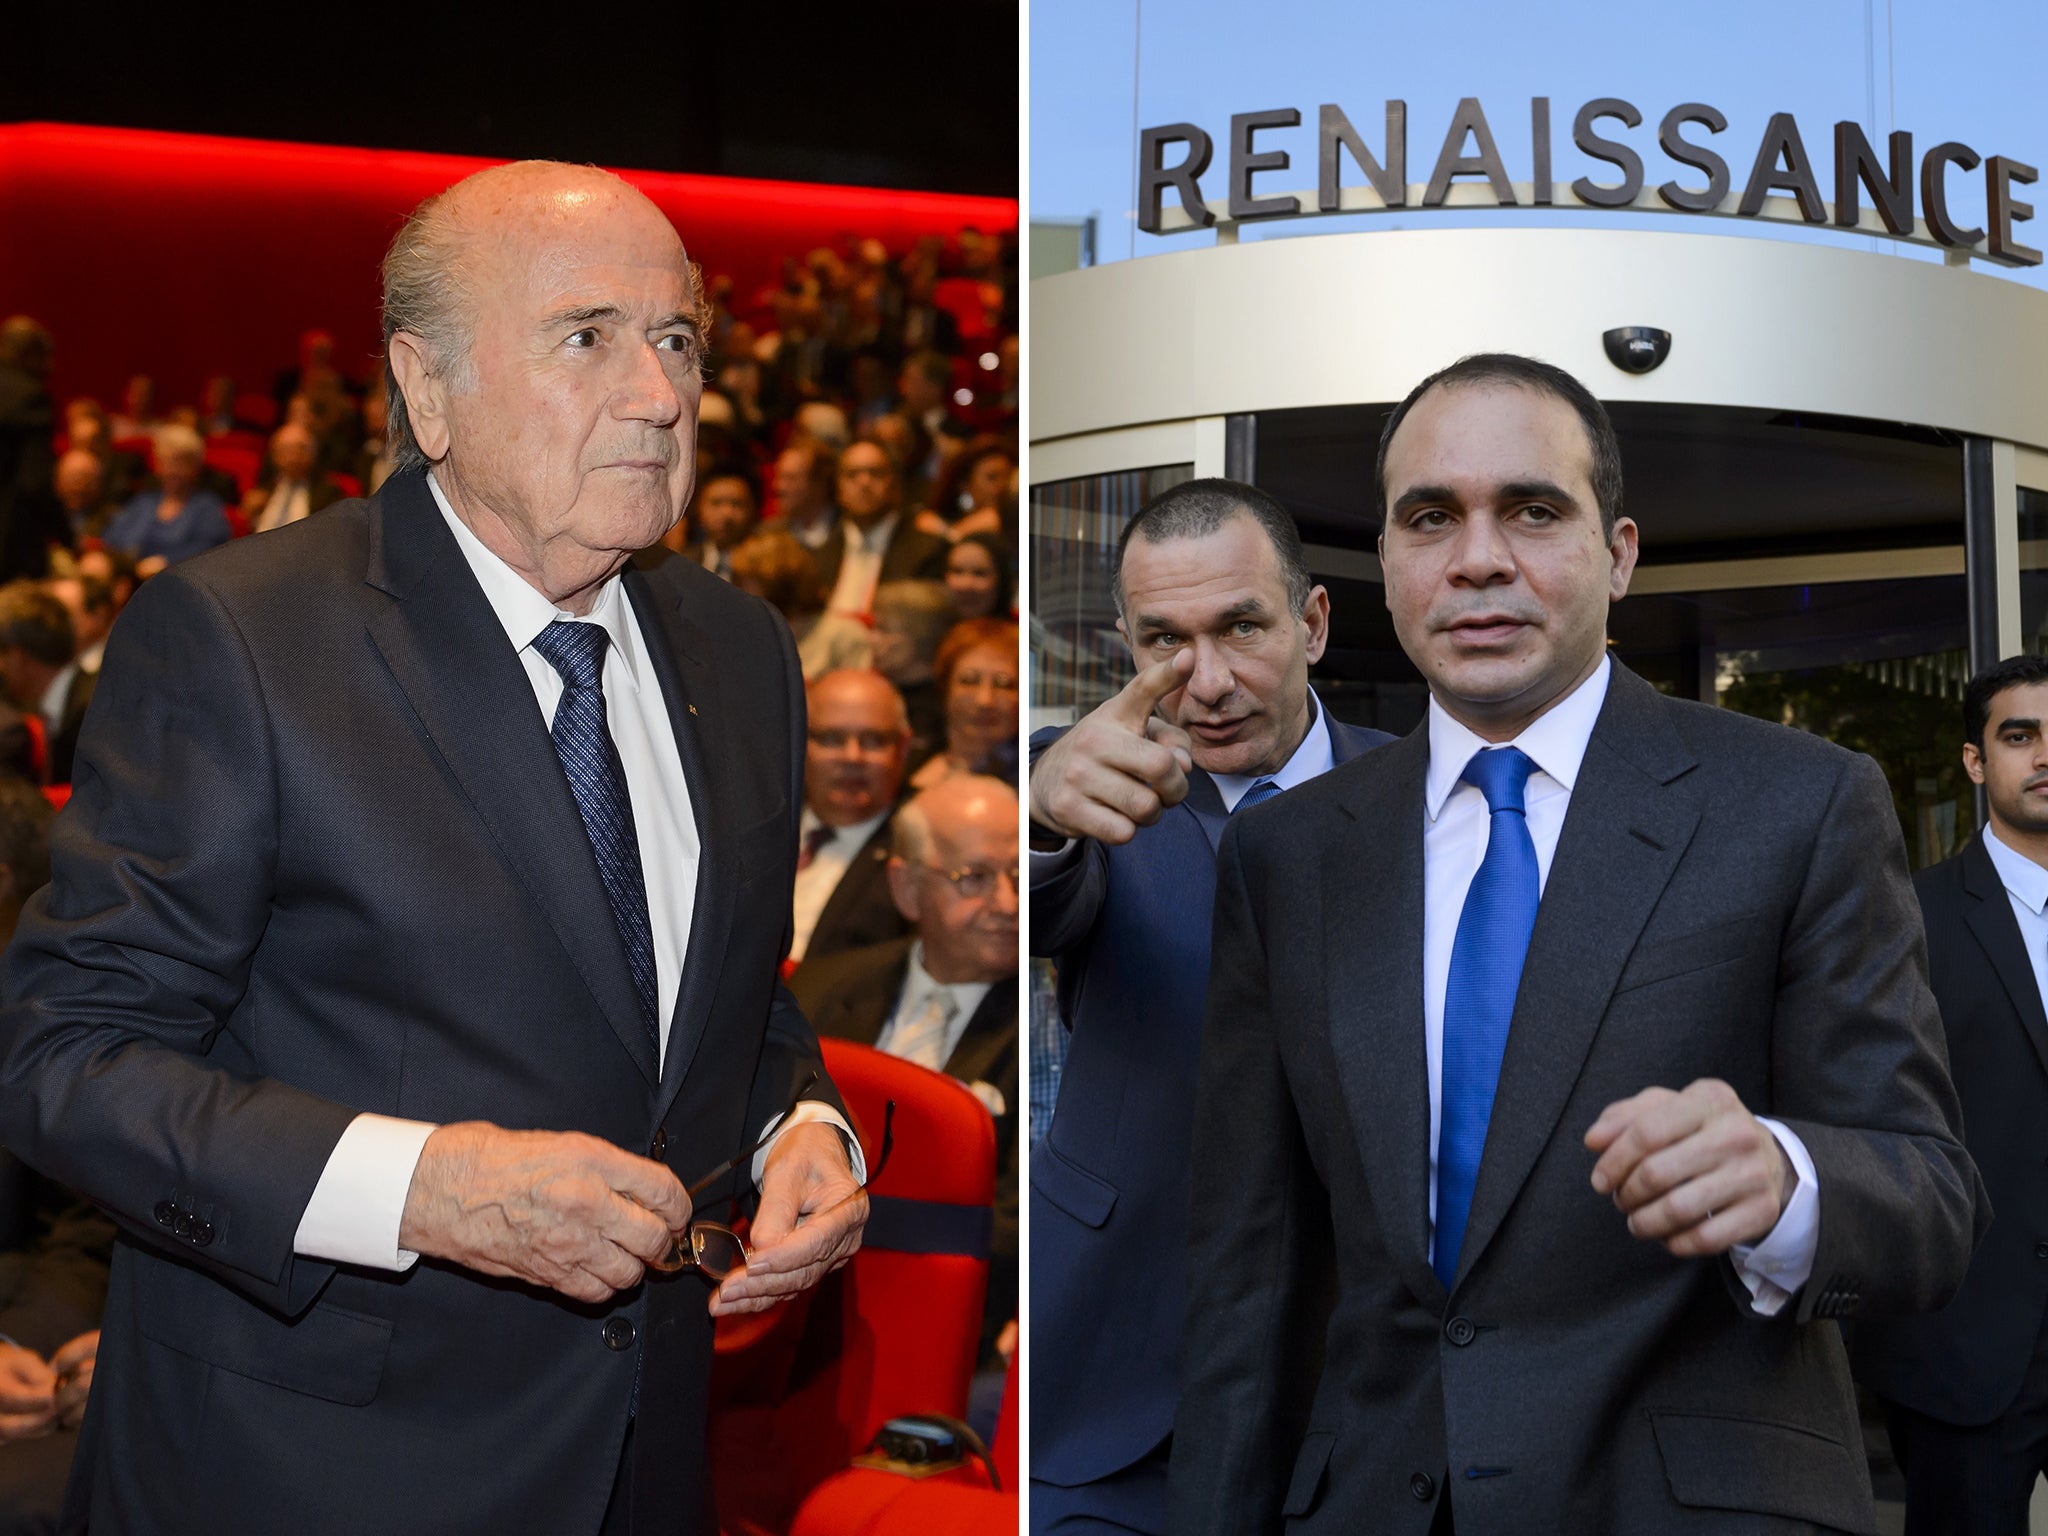 Sepp Blatter and Prince Ali bin al-Hussein